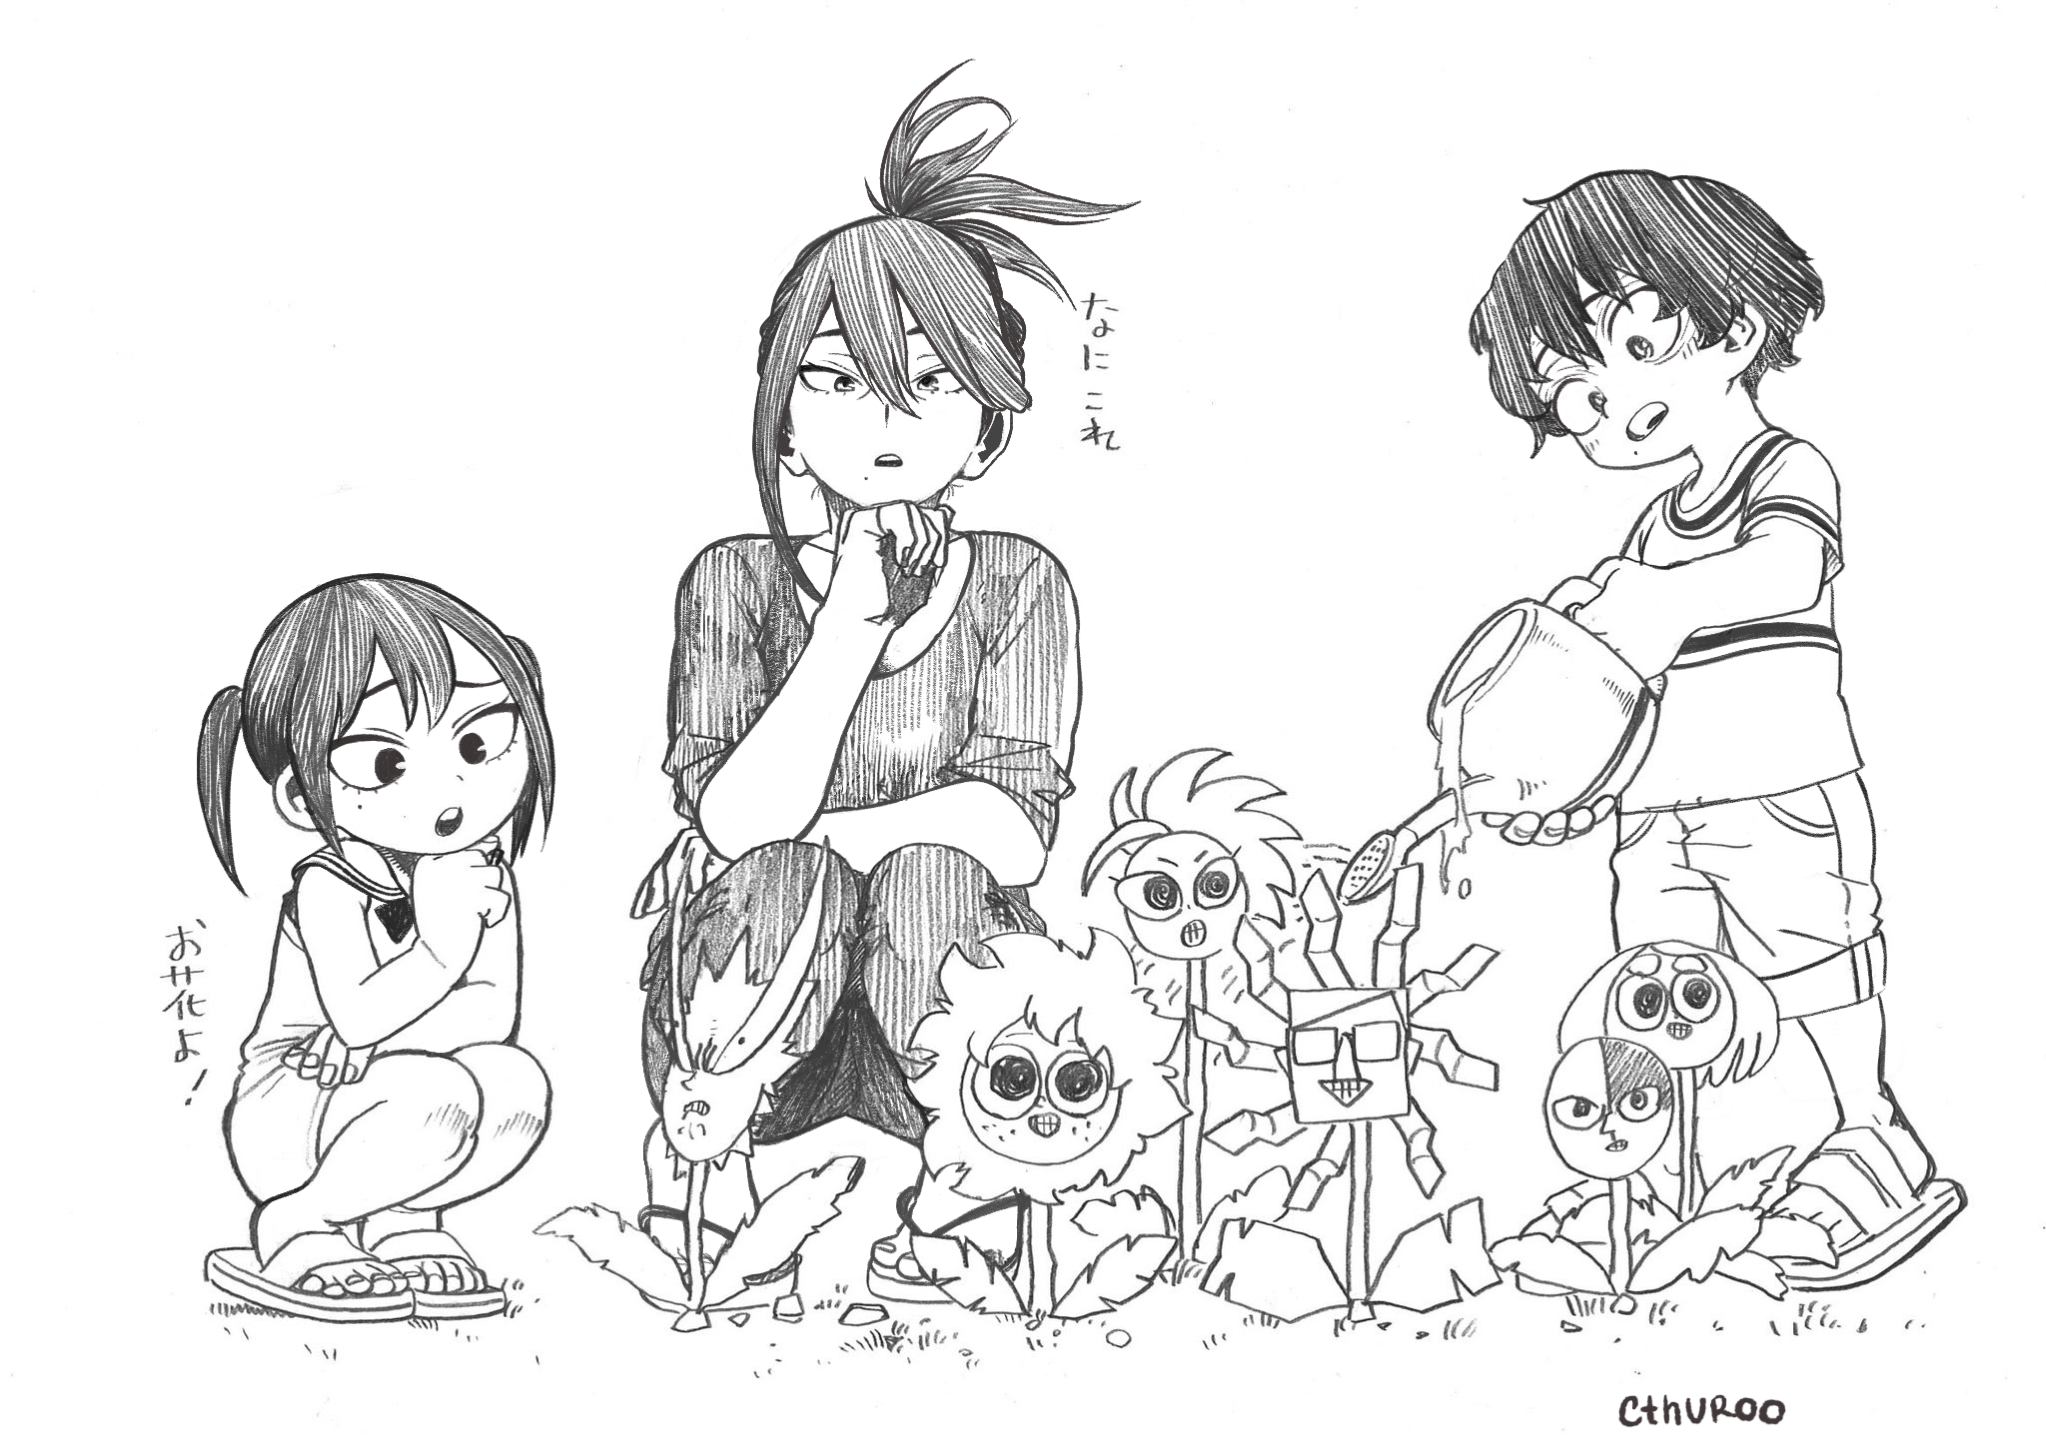 shimura family - Boku no Hero Academia Wallpaper (43839090) - Fanpop ...